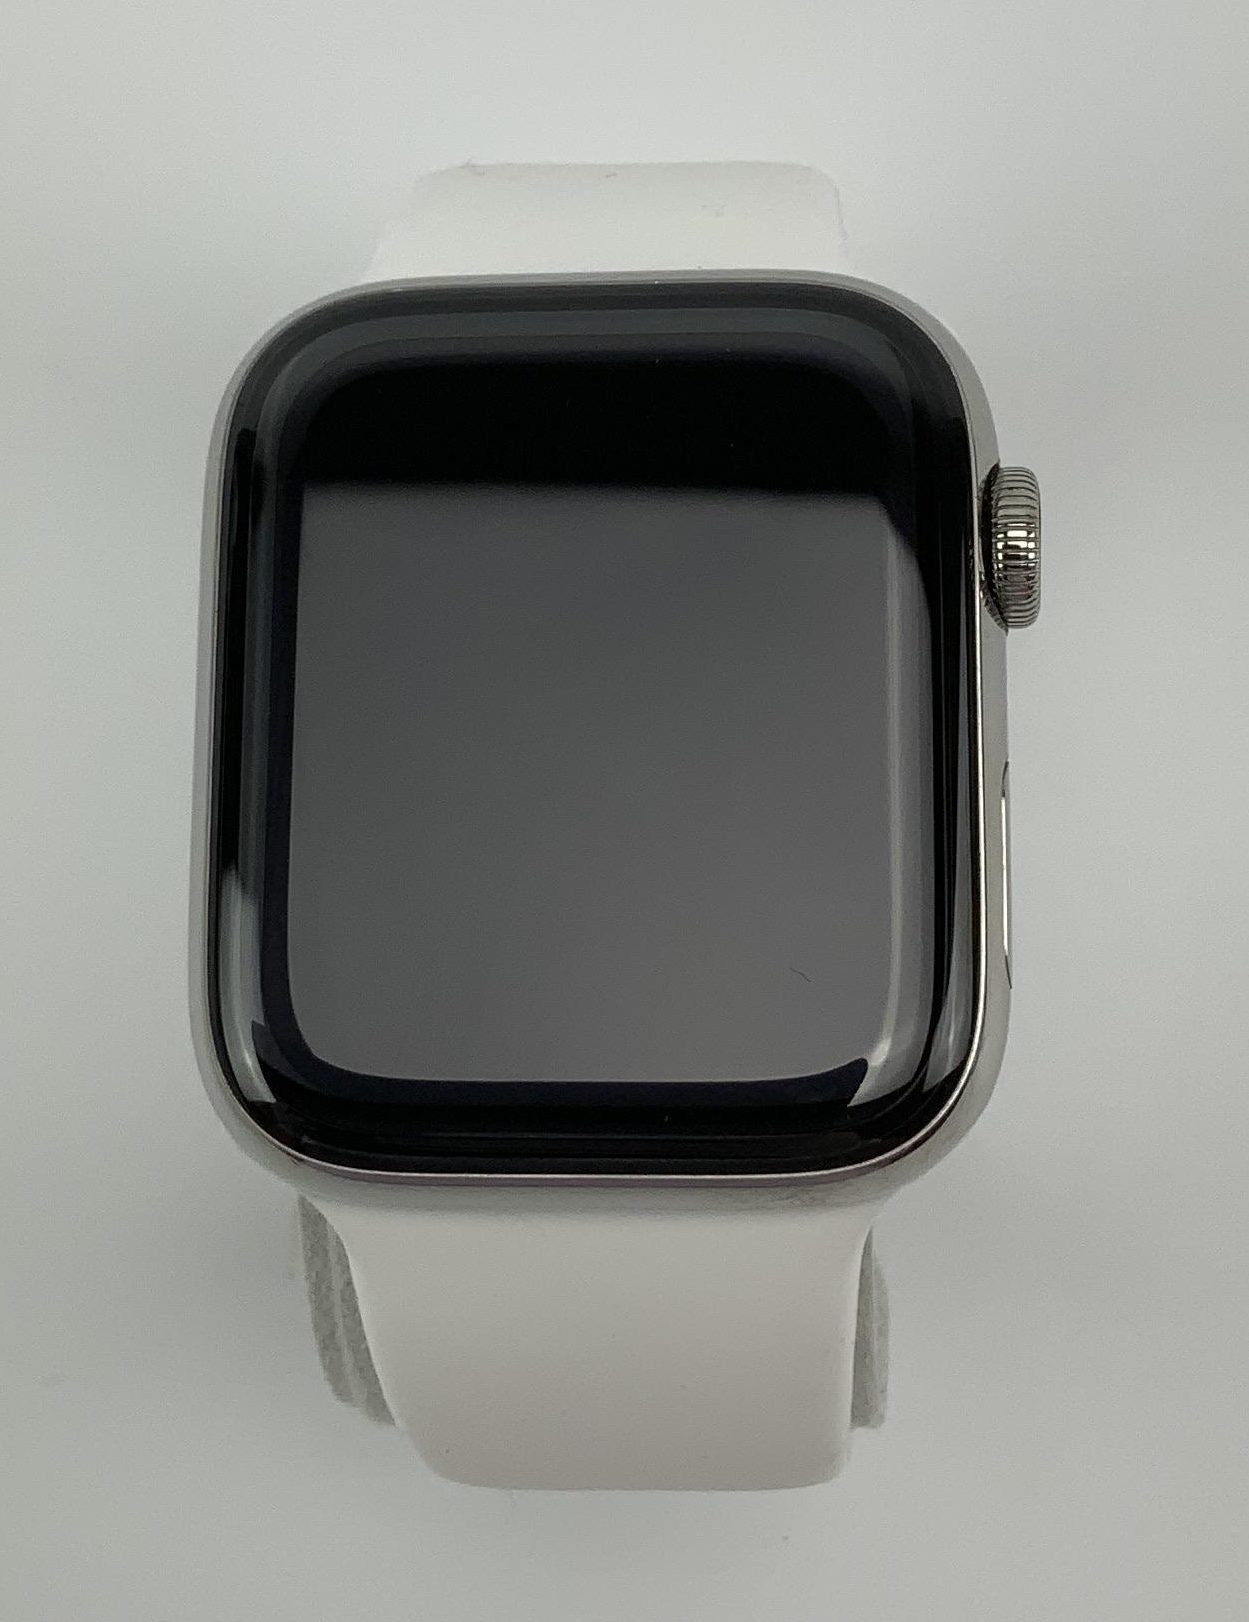 Watch Series 5 Steel Cellular (44mm), Silver, imagen 1